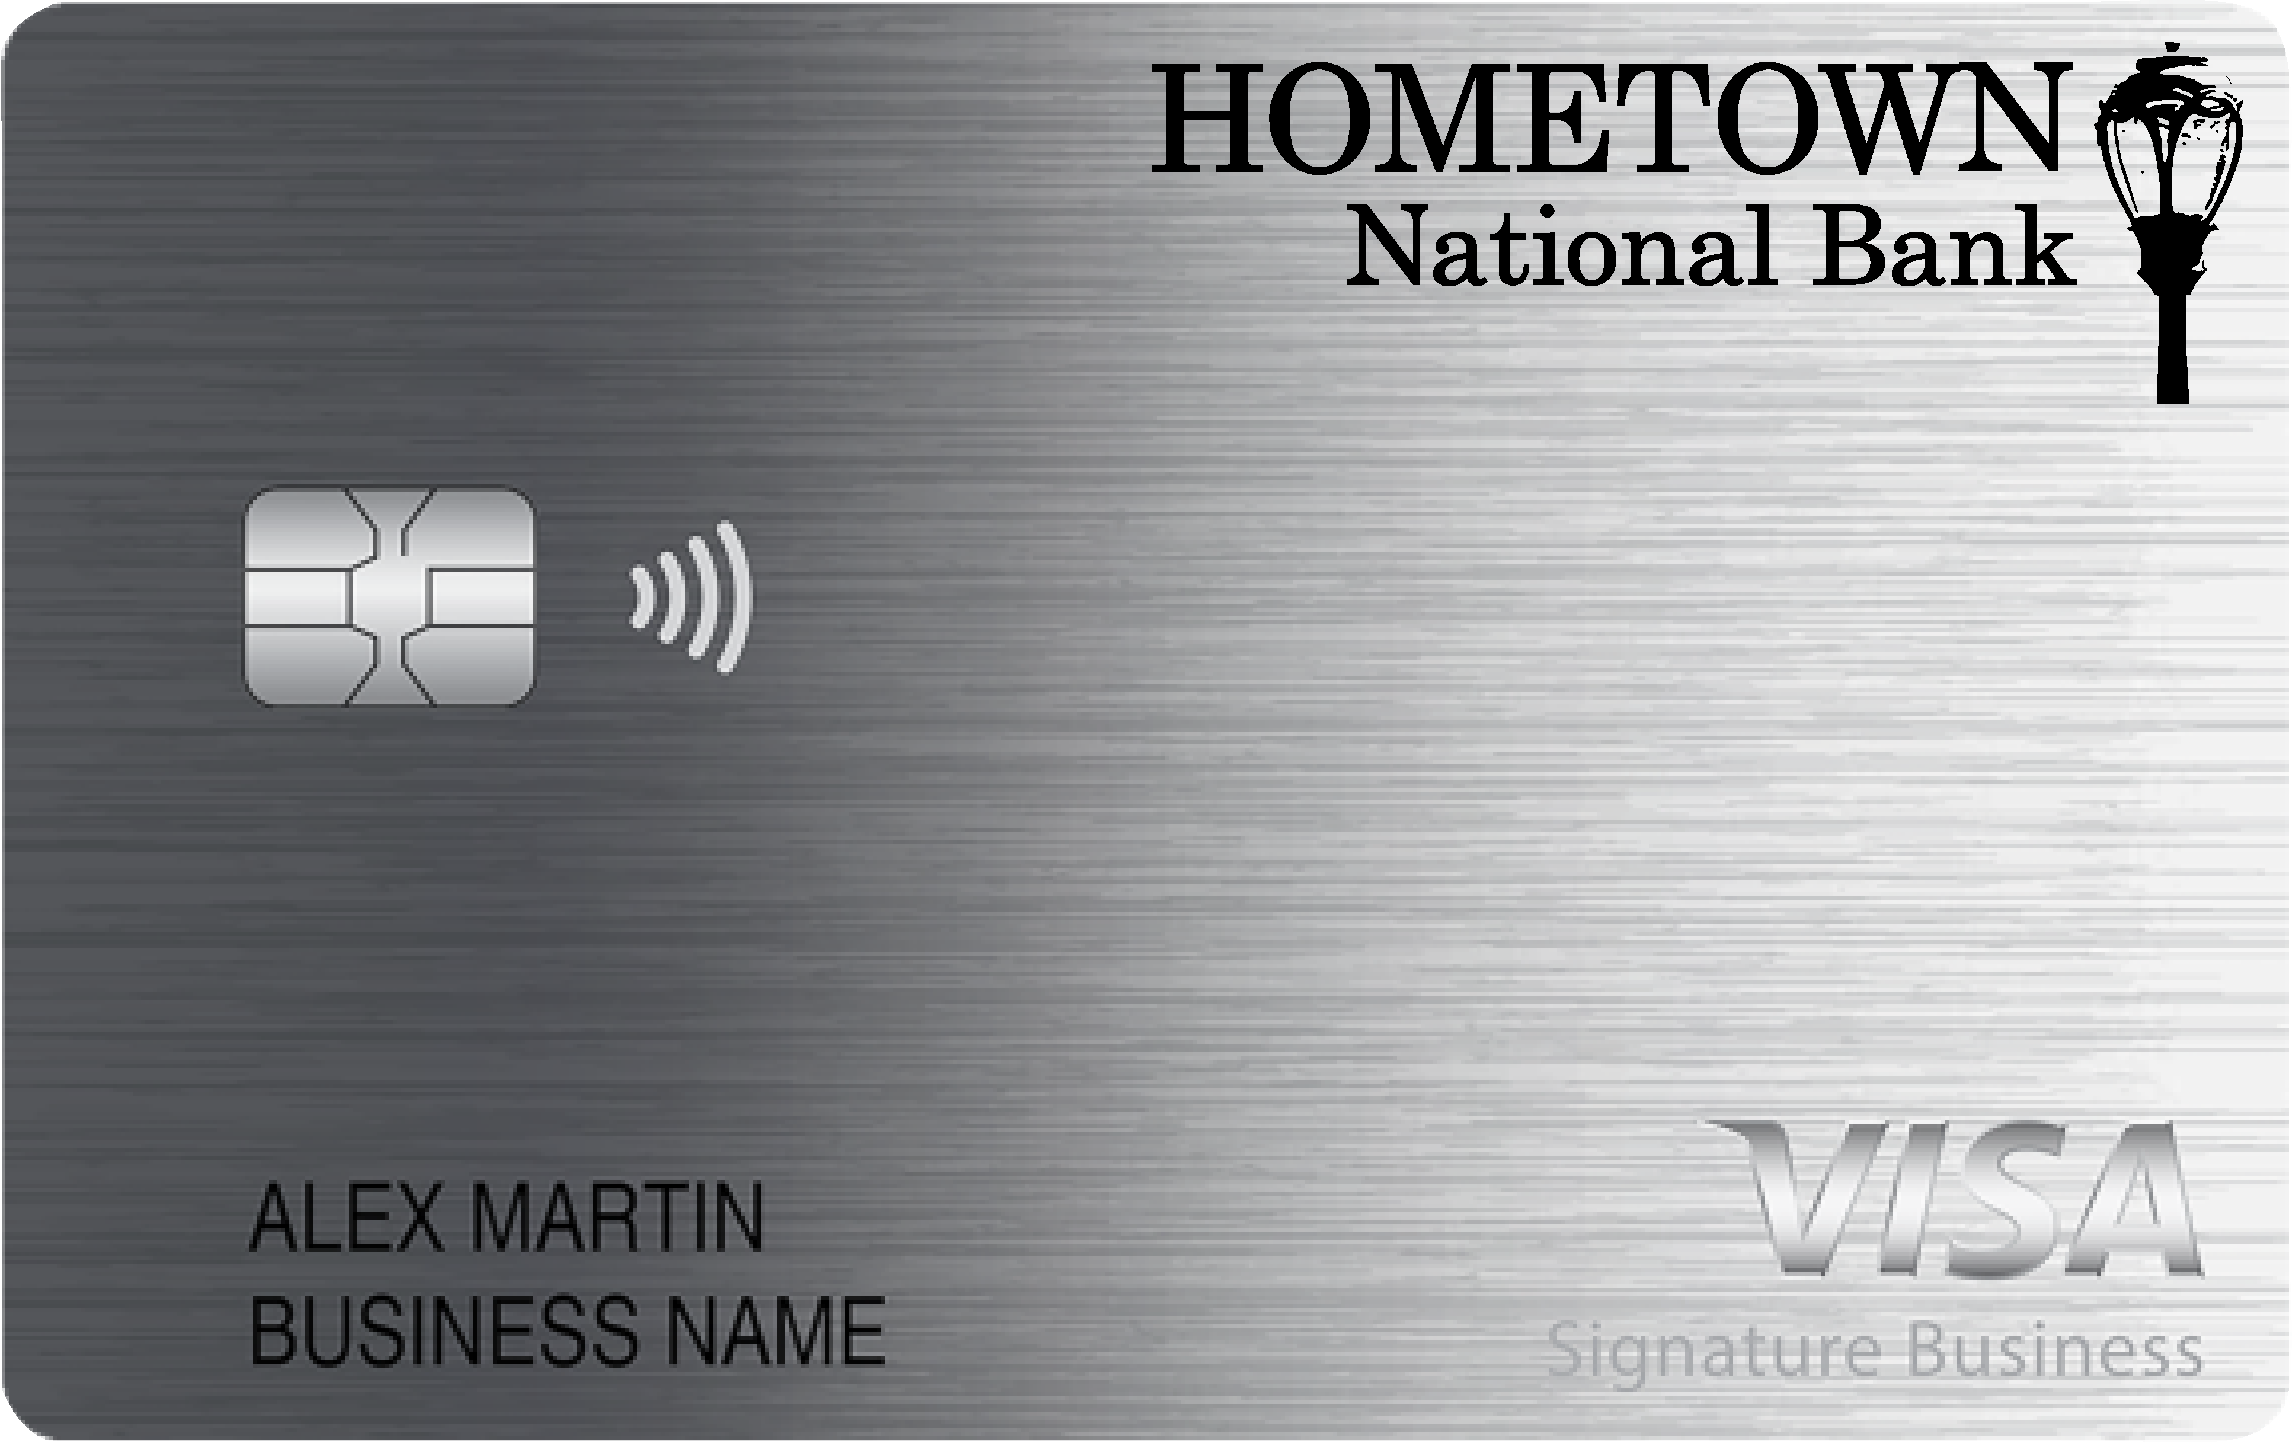 Hometown National Bank Smart Business Rewards Card